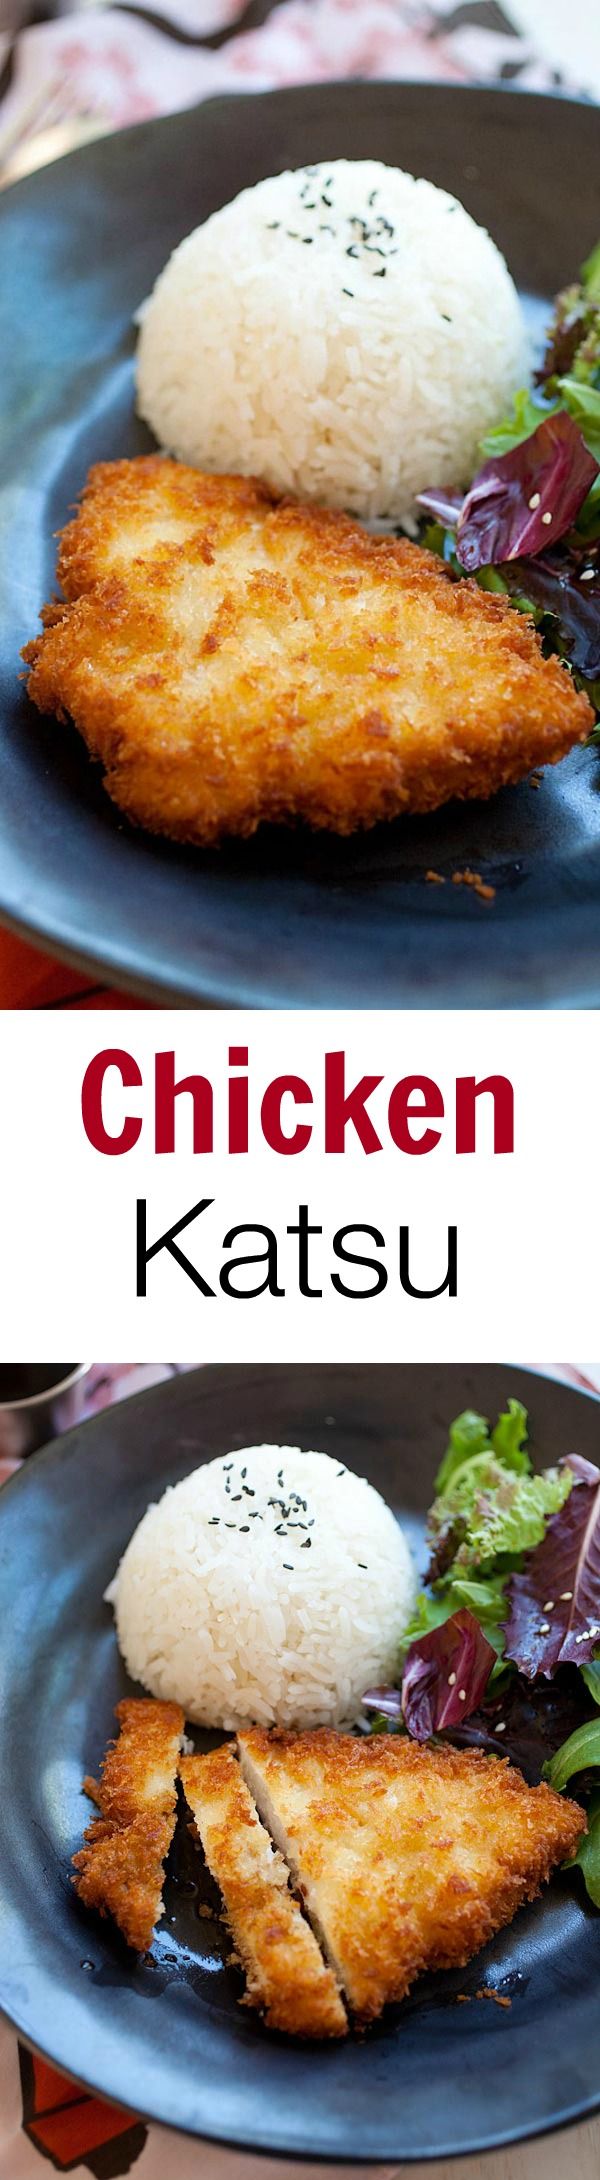 Chicken Katsu is Japanese fried chicken cutlet with bread crumbs/panko. Easy chicken katsu recipe, served with Tonkatsu sauce | rasamalaysia.com